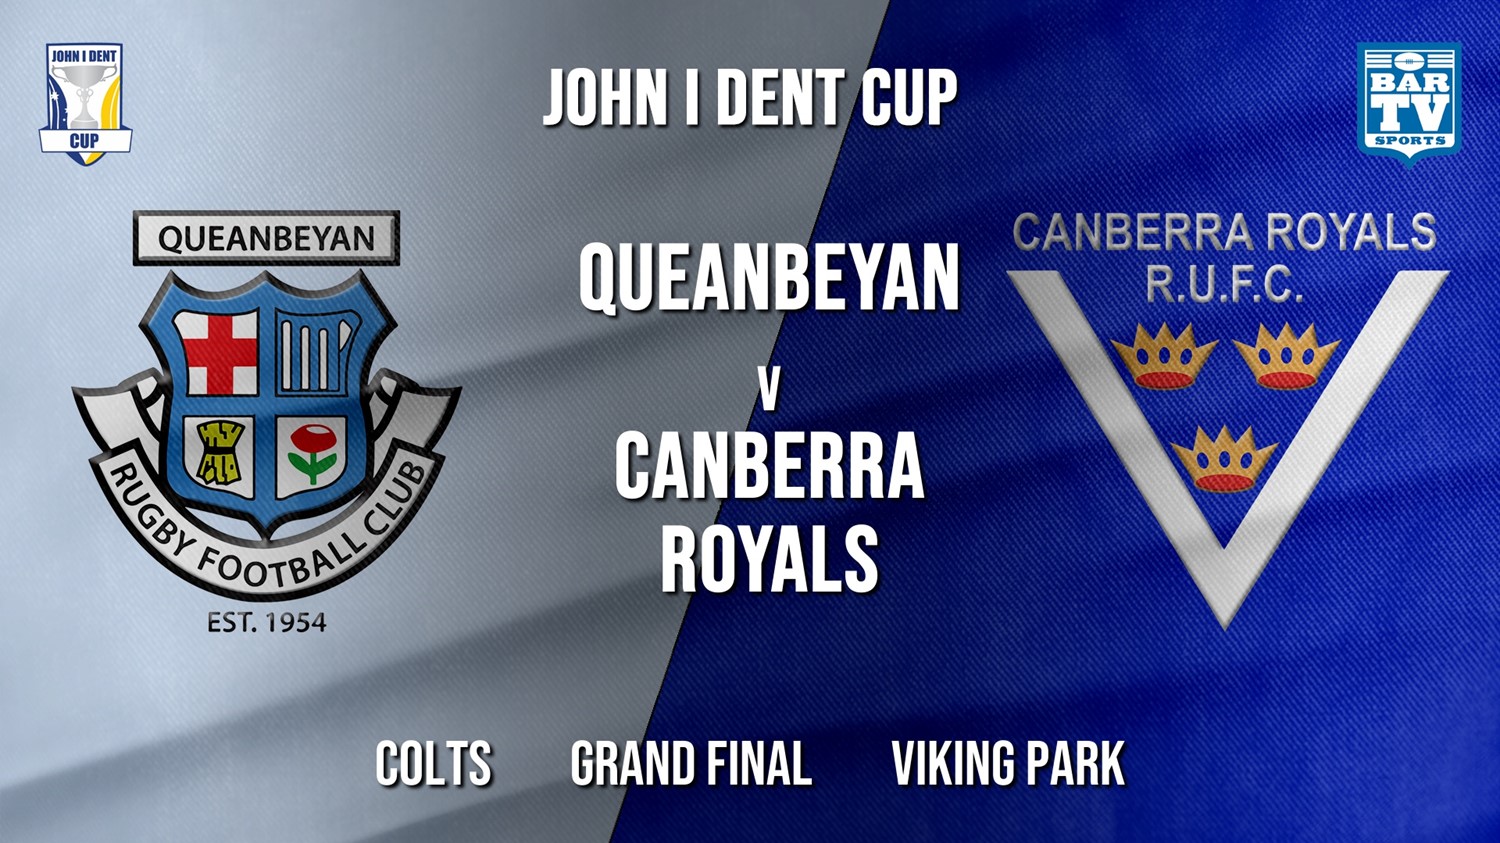 John I Dent Grand Final - Colts - Queanbeyan Whites v Canberra Royals Minigame Slate Image